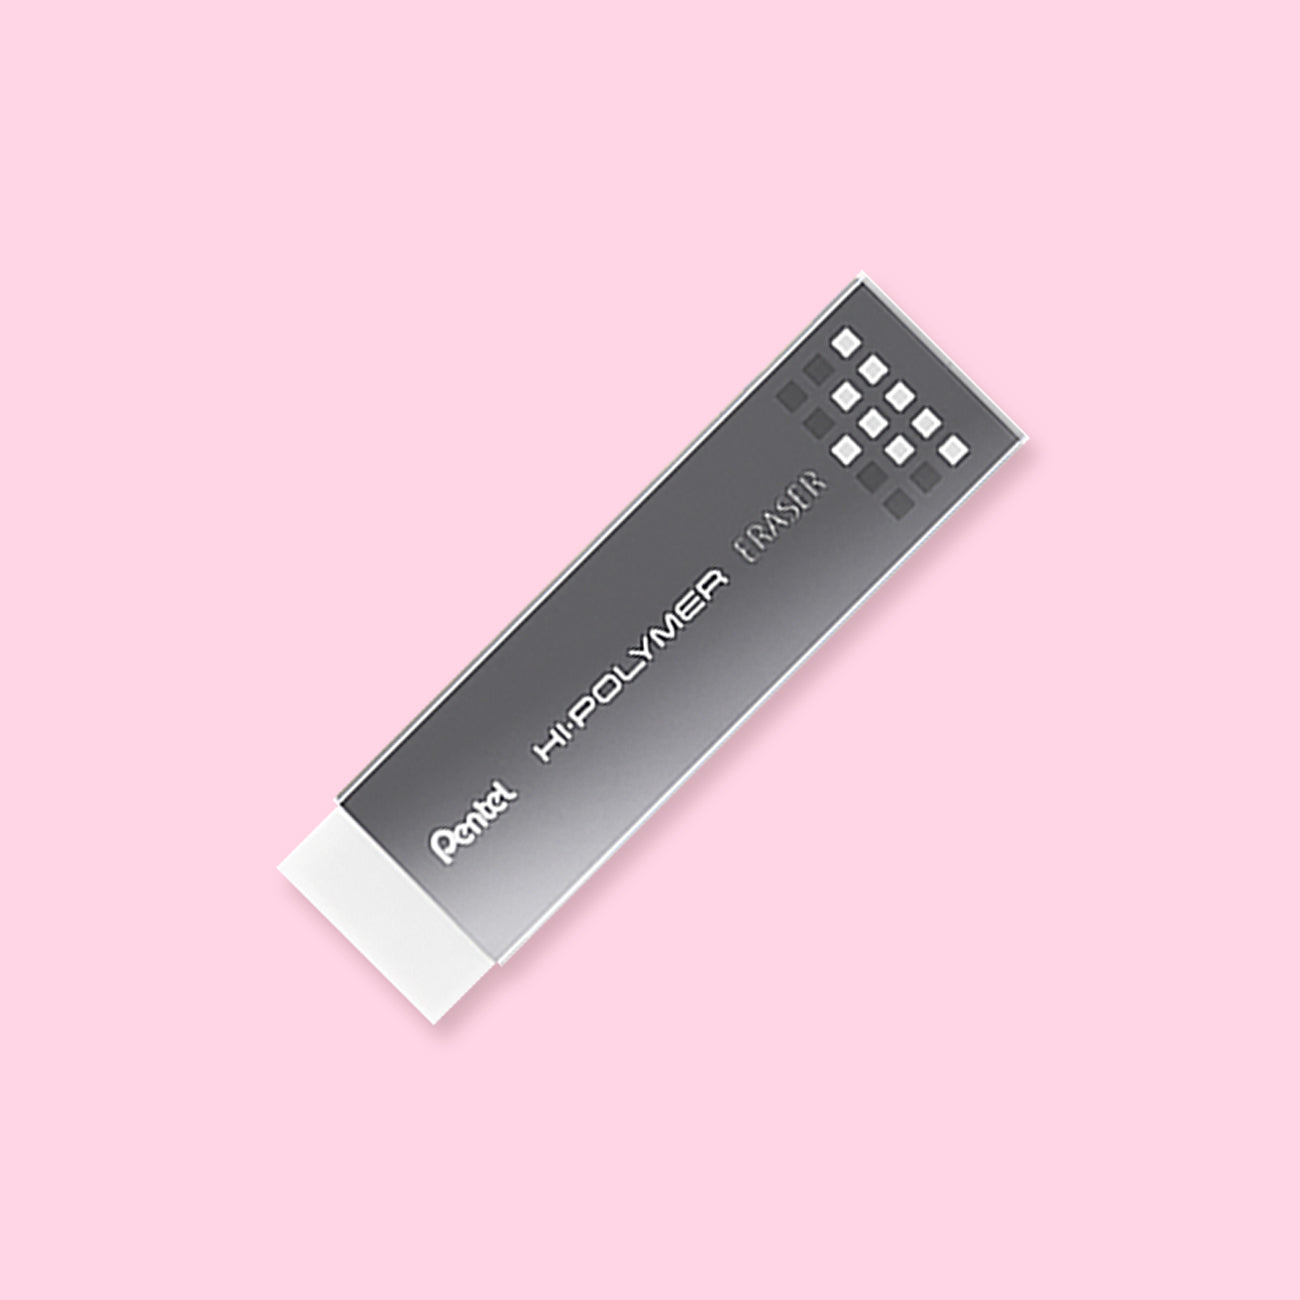 Pentel Slim Hi-Polymer Eraser - Silver